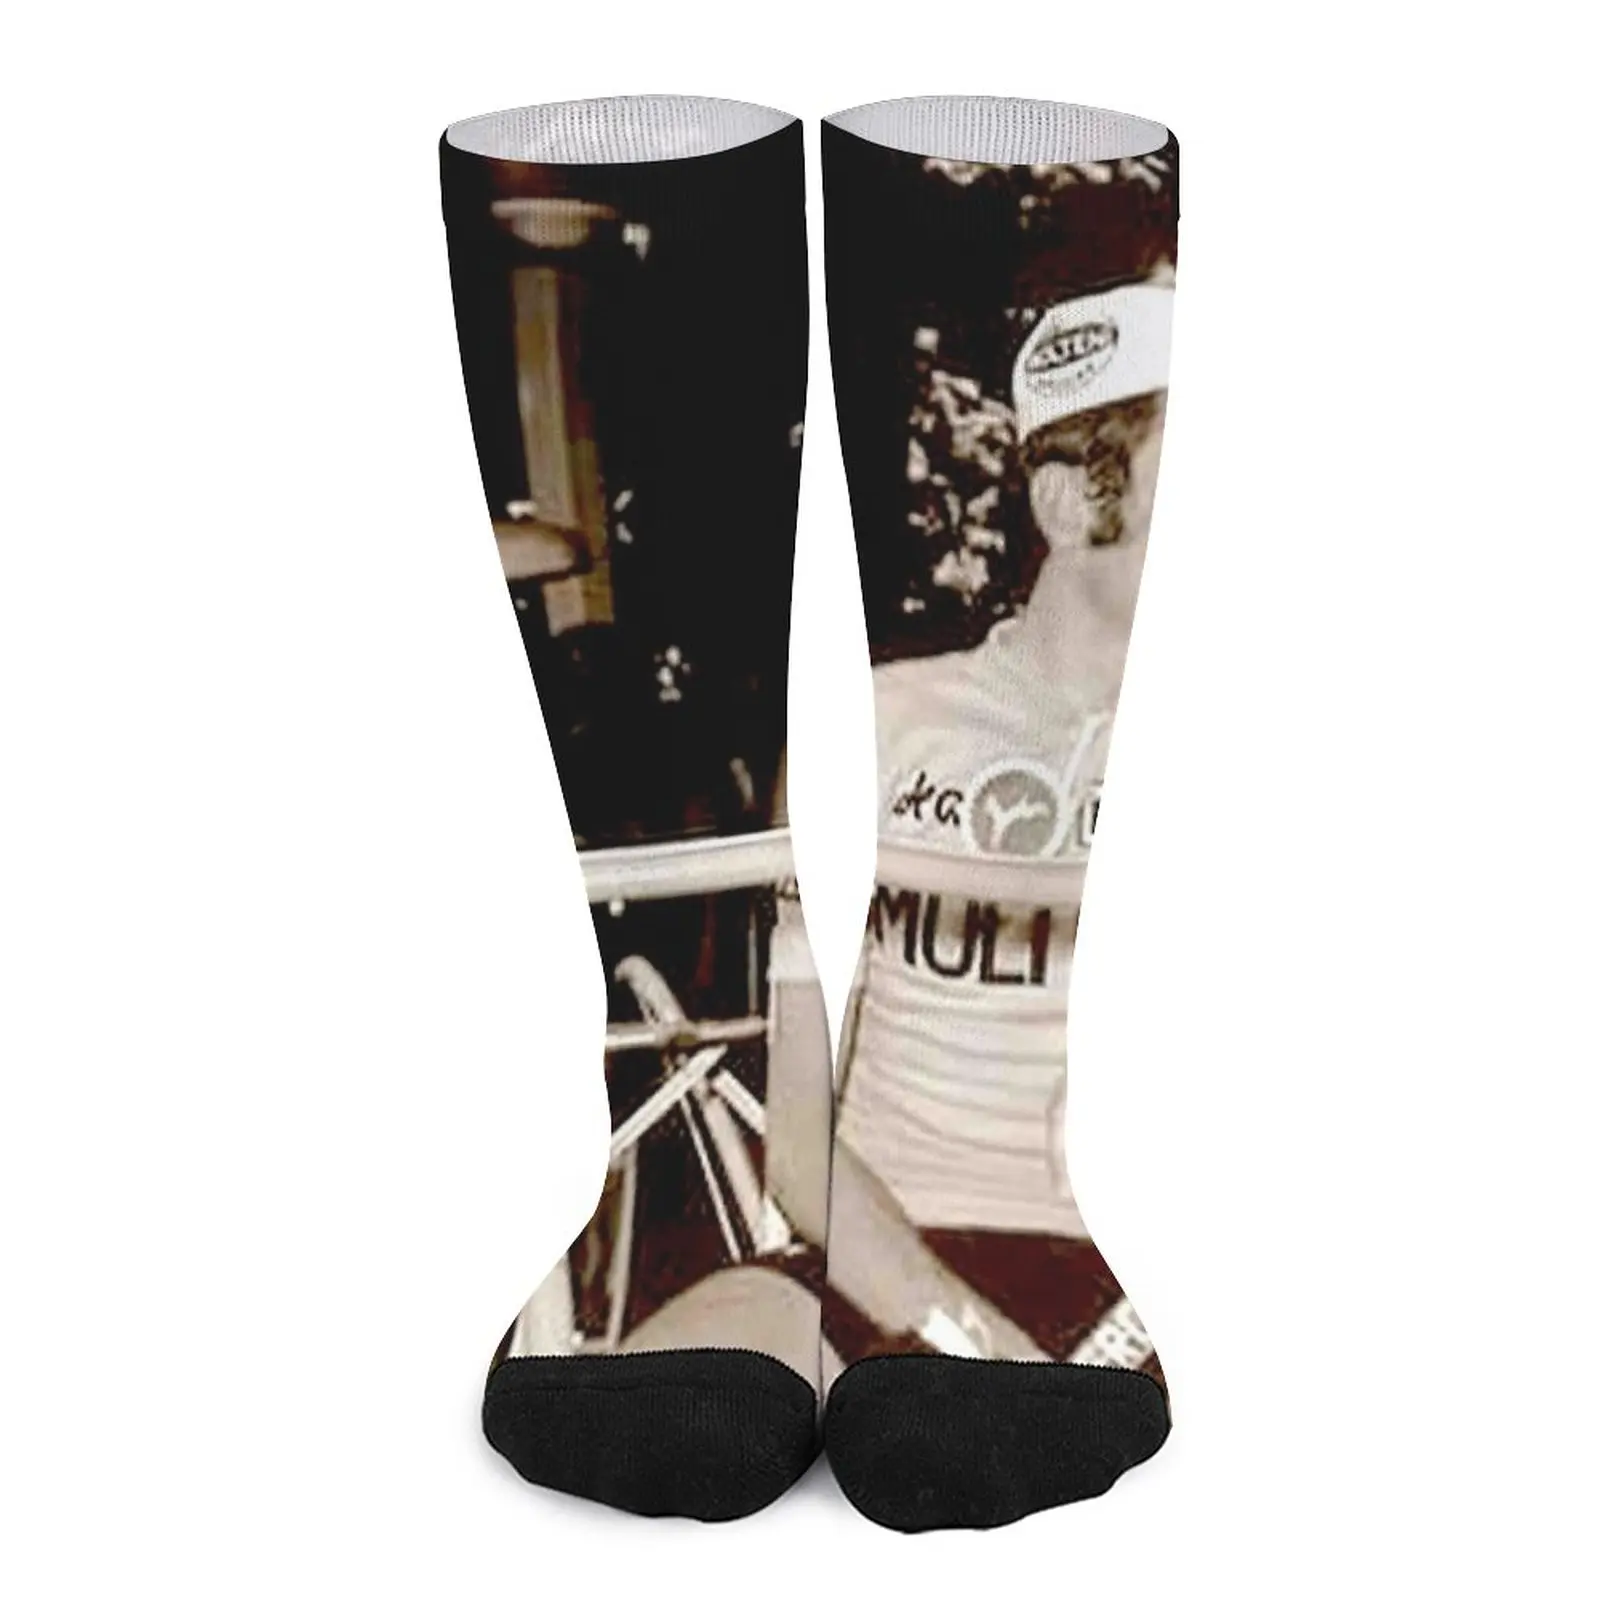 EDDY MERCKX: Vintage Bicycle Racing Print Socks funny gift cool socks Women's socks